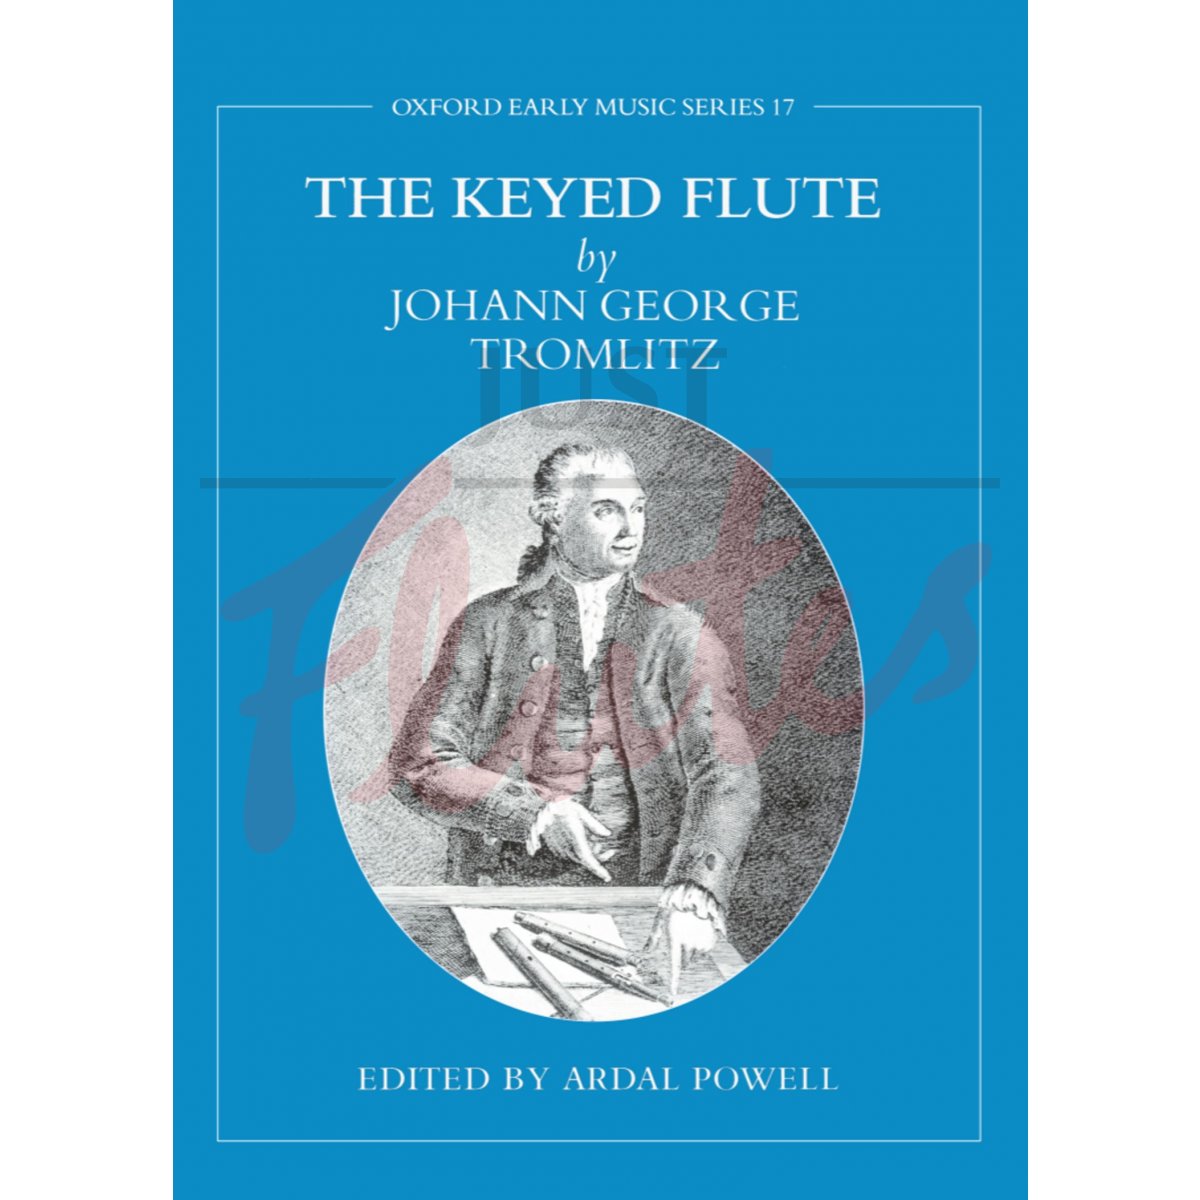 The Keyed Flute